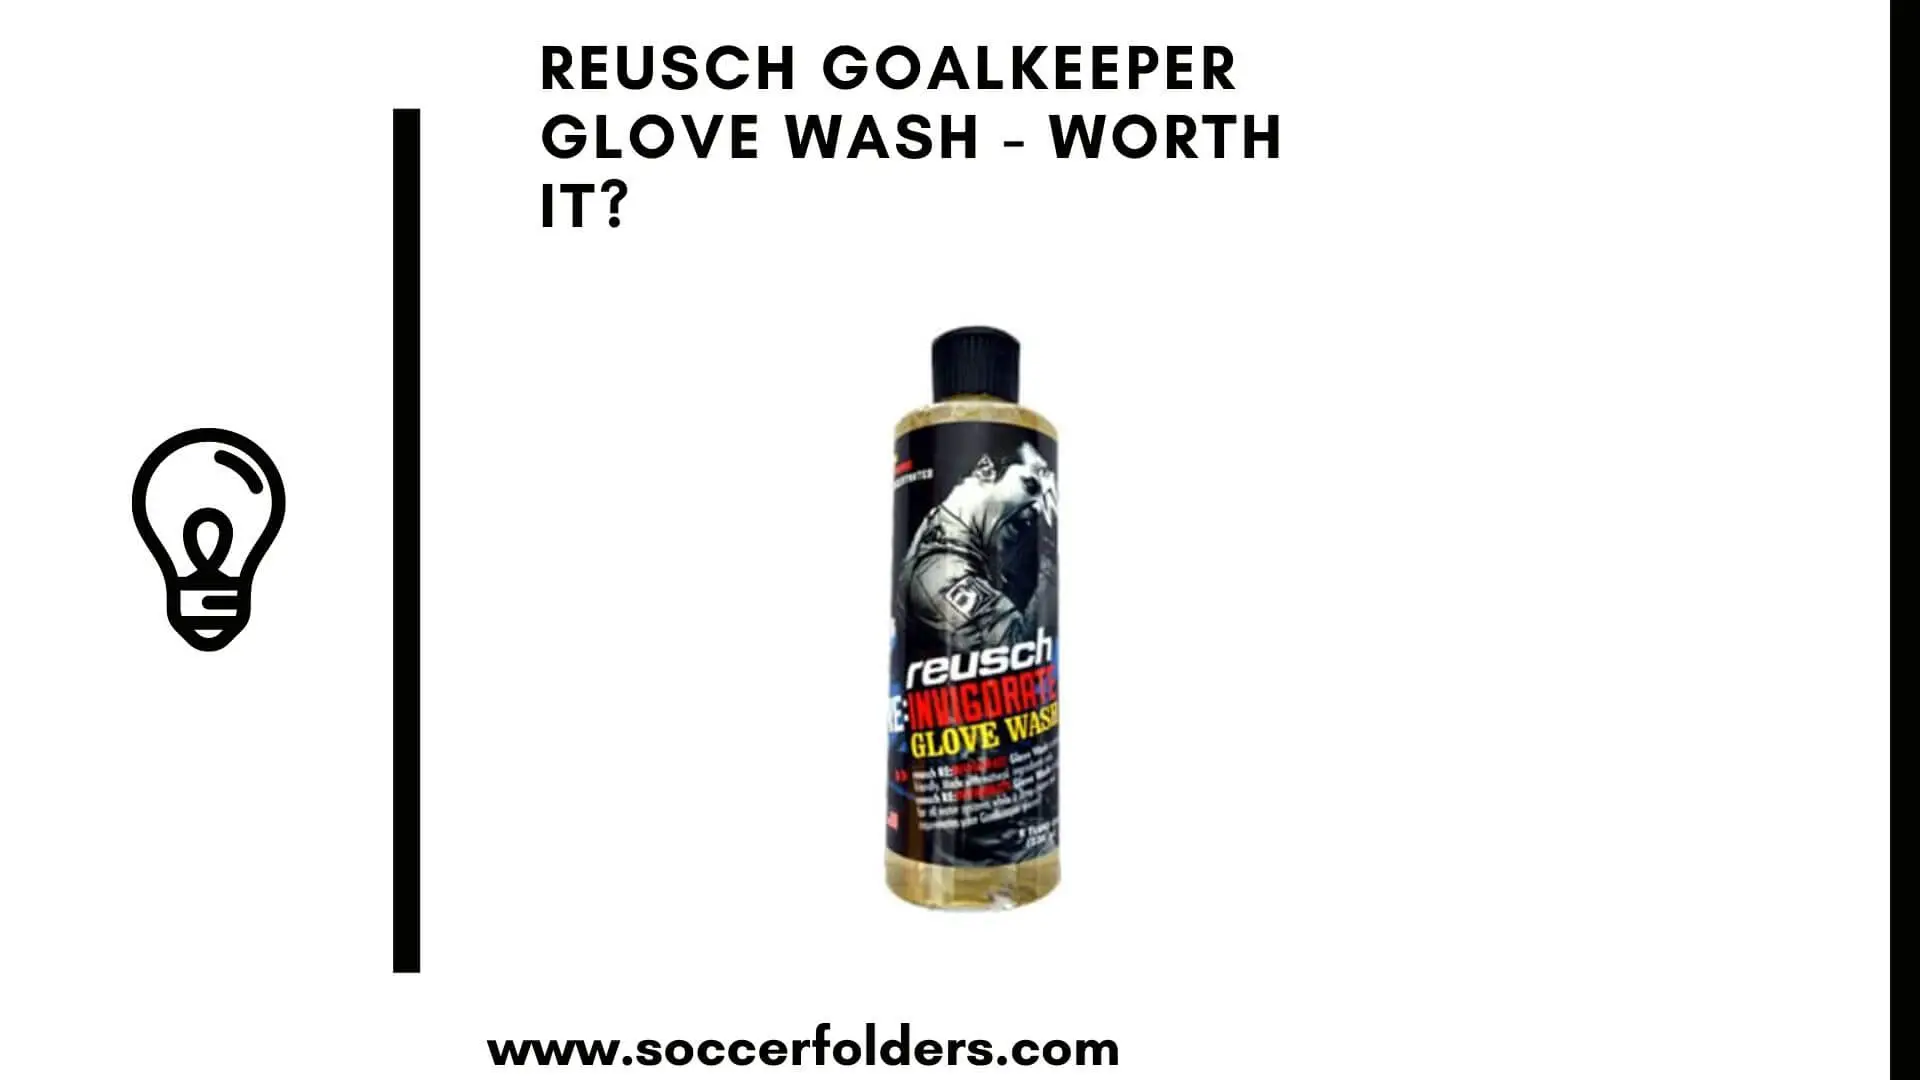 Reusch goalkeeper glove wash - Featured image